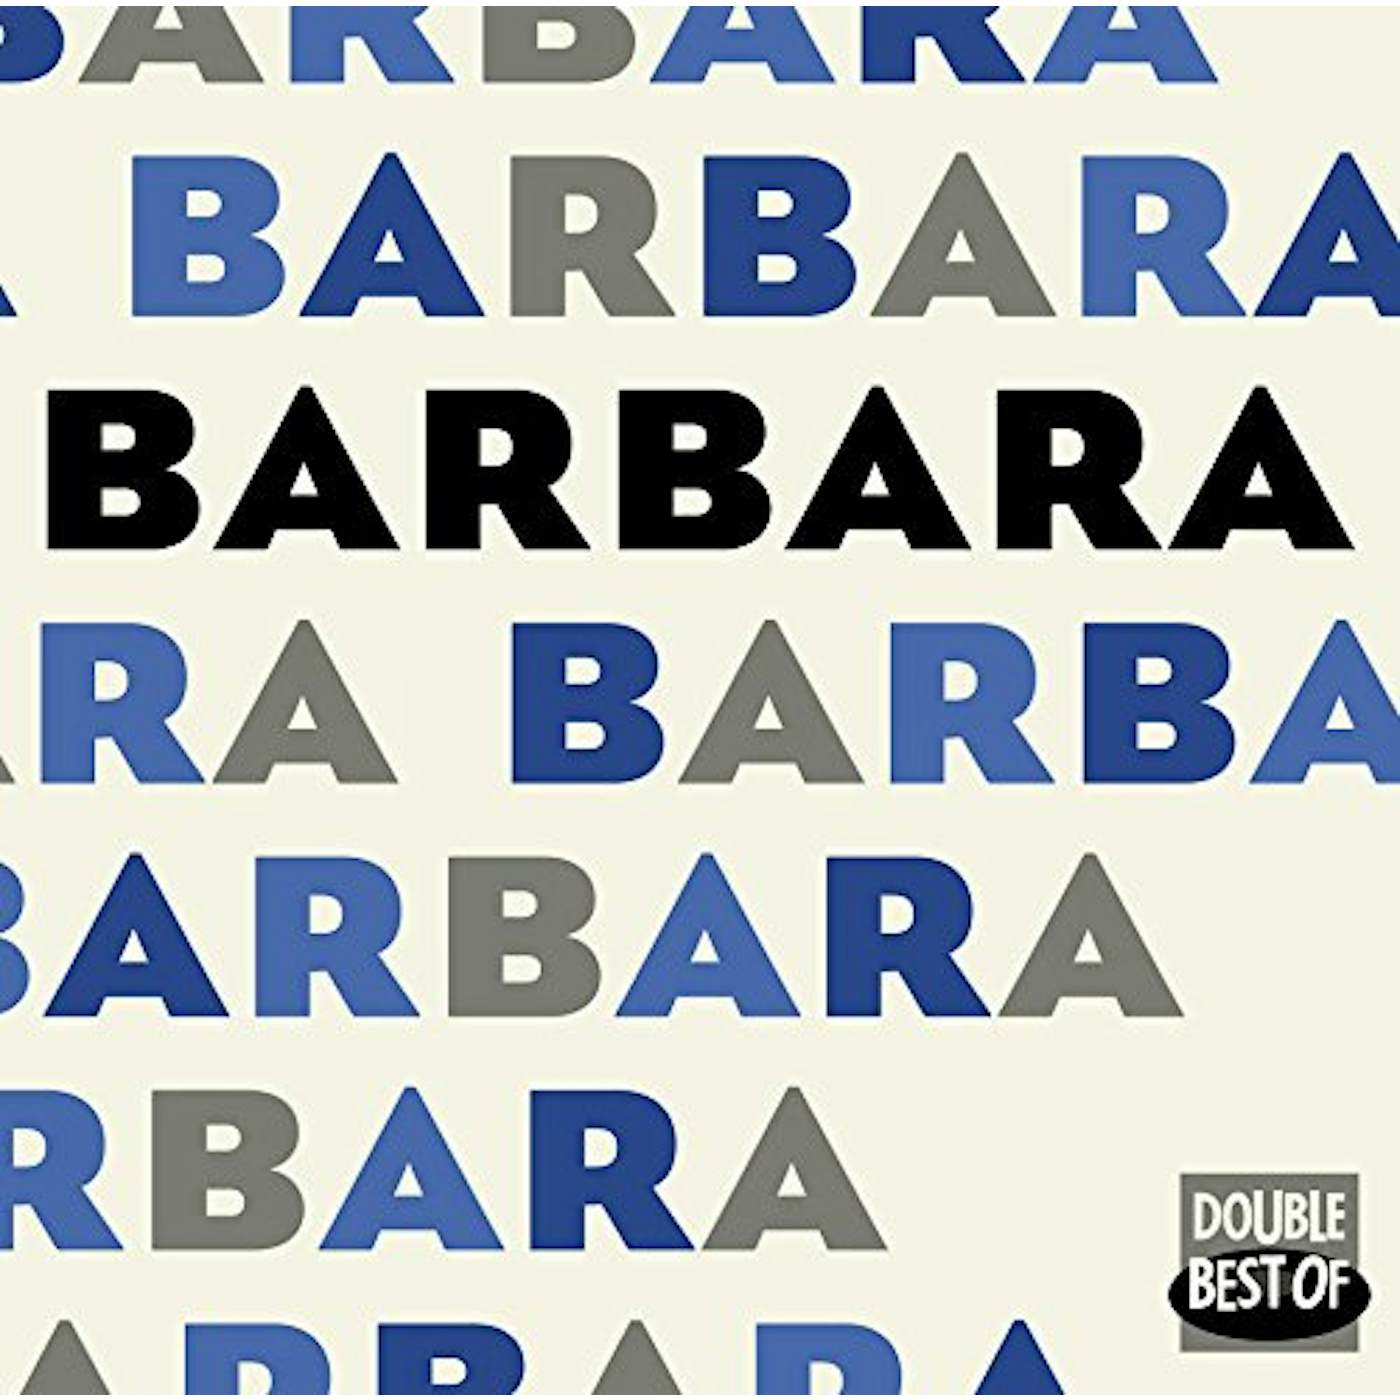 Barbara Double Best Of Vinyl Record